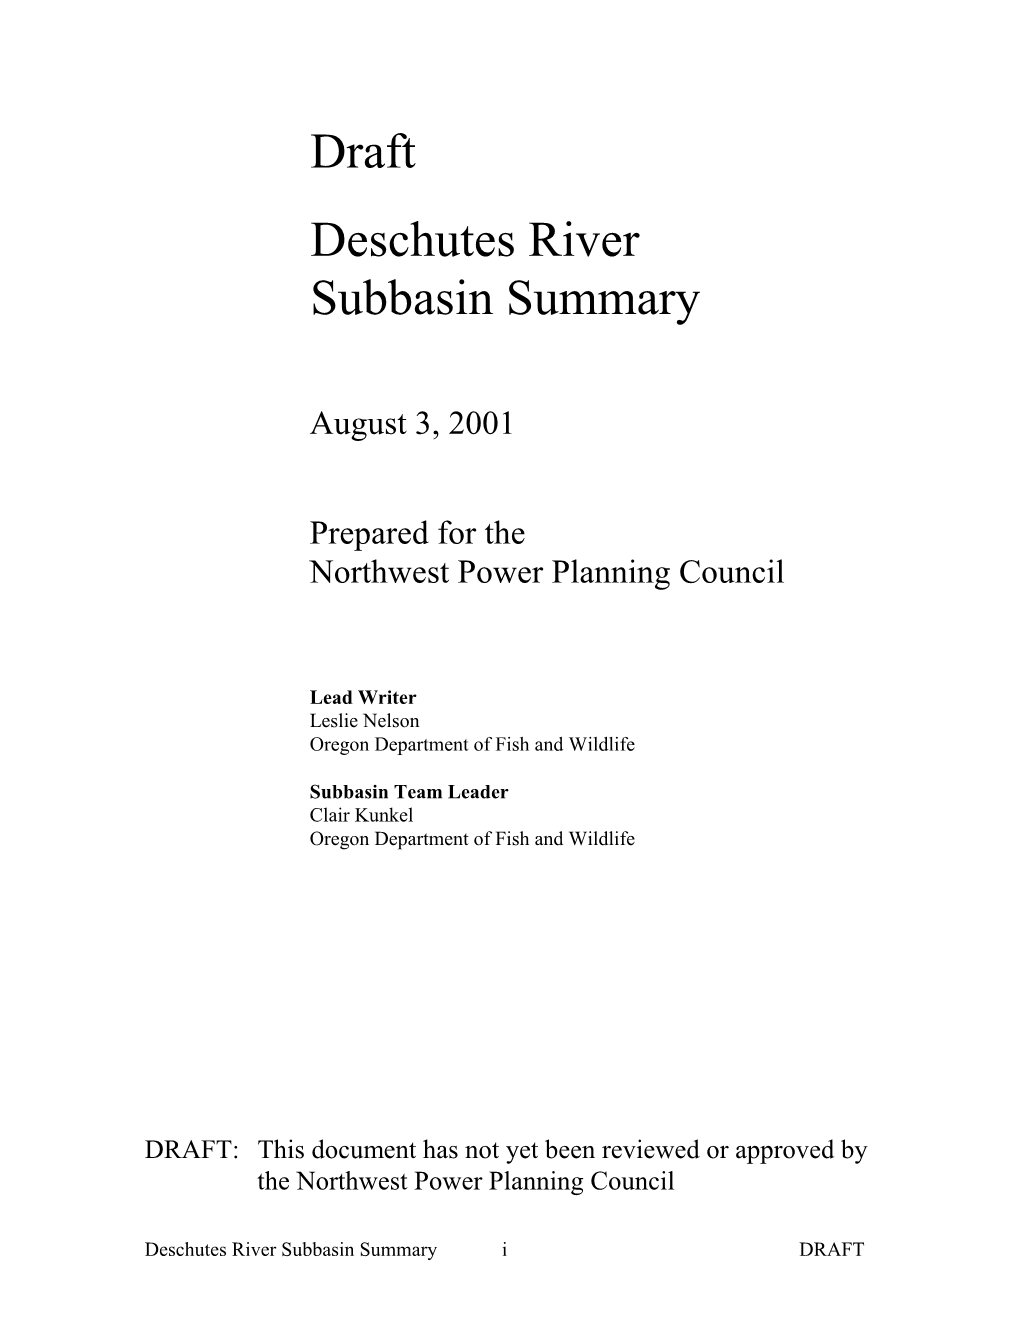 Draft Deschutes River Subbasin Summary